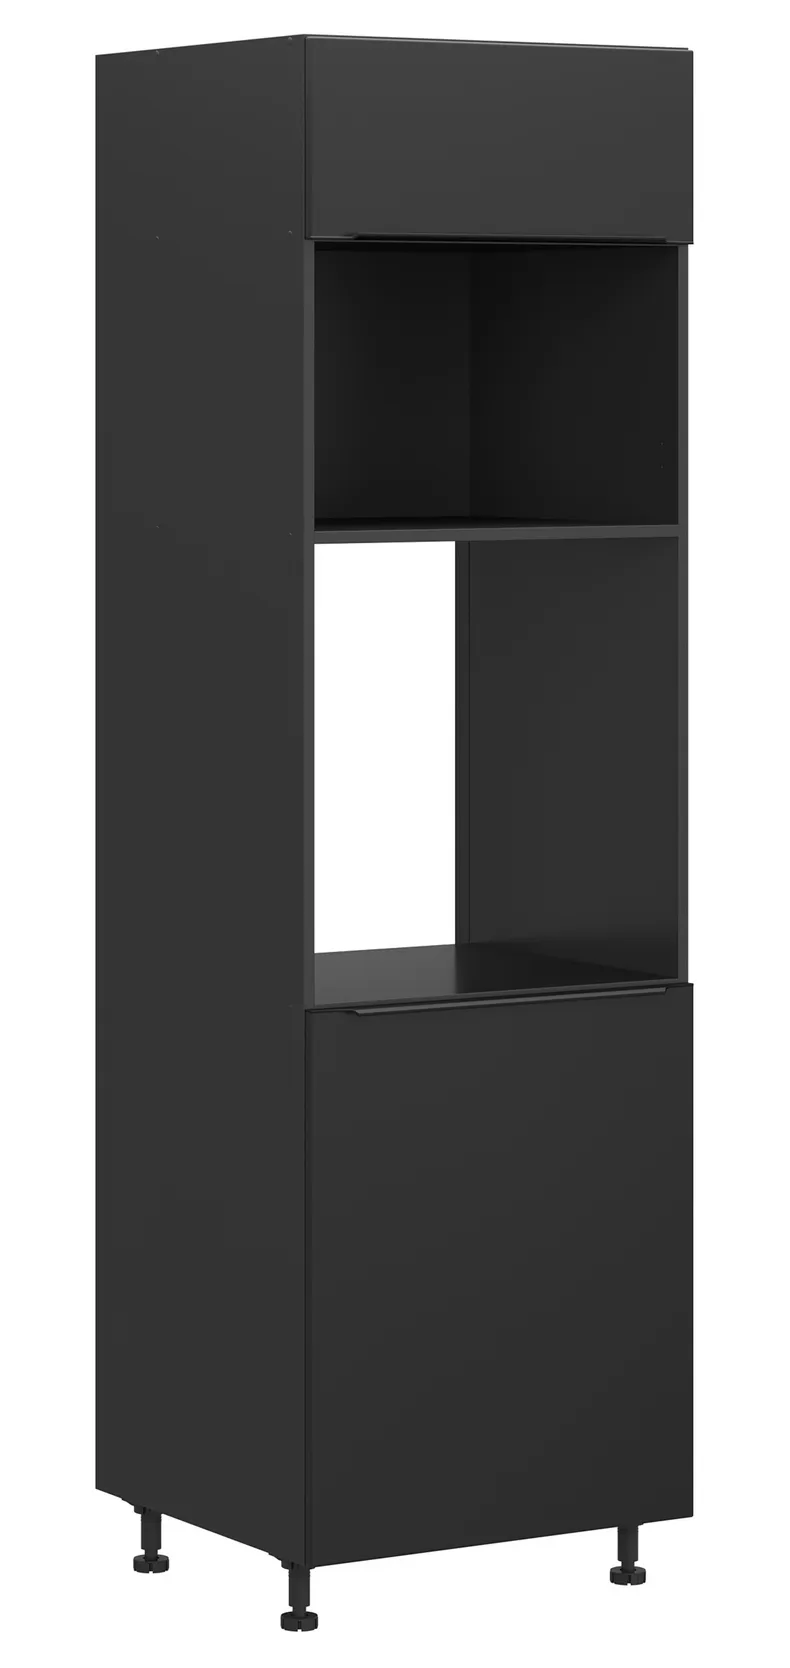 BRW Кухонный шкаф Sole L6 60 см левосторонний матовый черный, черный/черный матовый FM_DPS_60/207_L/O-CA/CAM фото №2